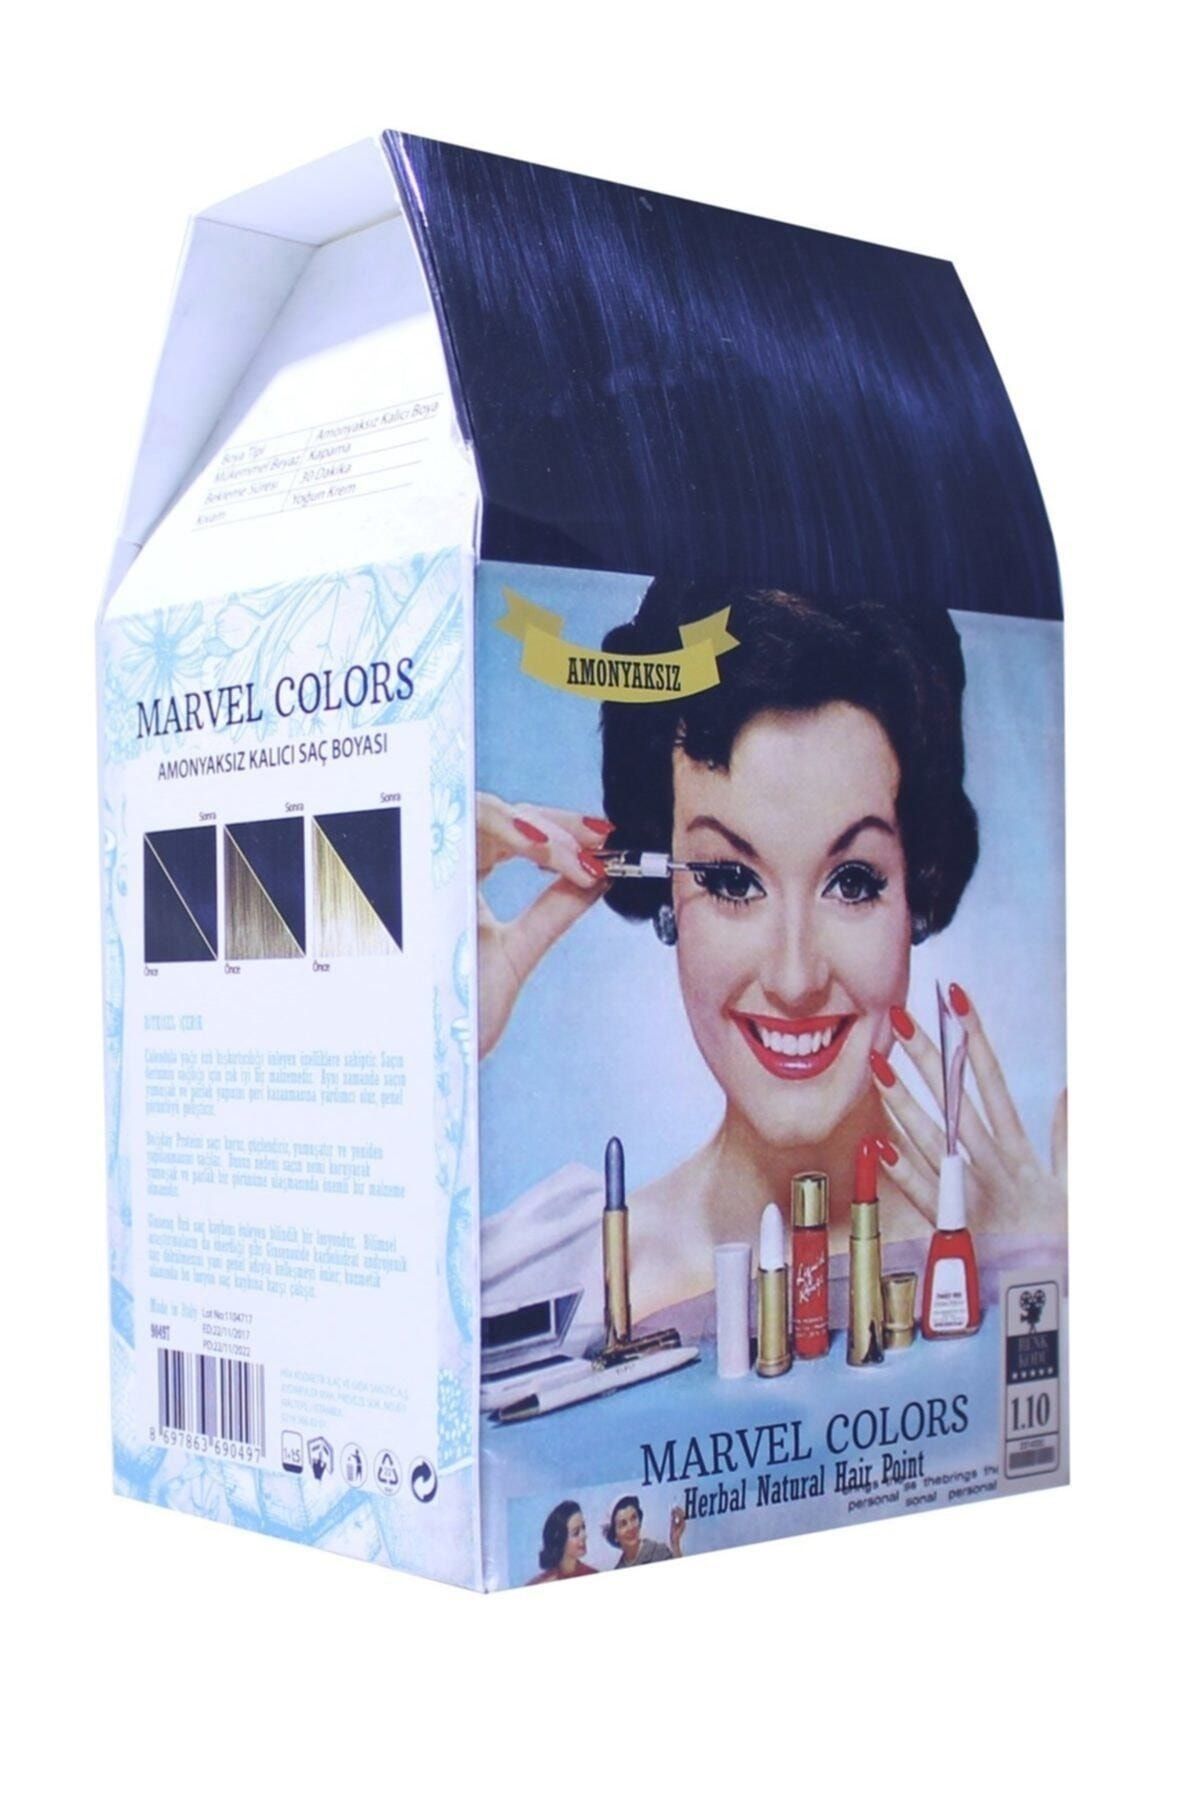 Marvel Colors Herbal Naturel Hair Saç Boyası 1.10 Mavi Siyah